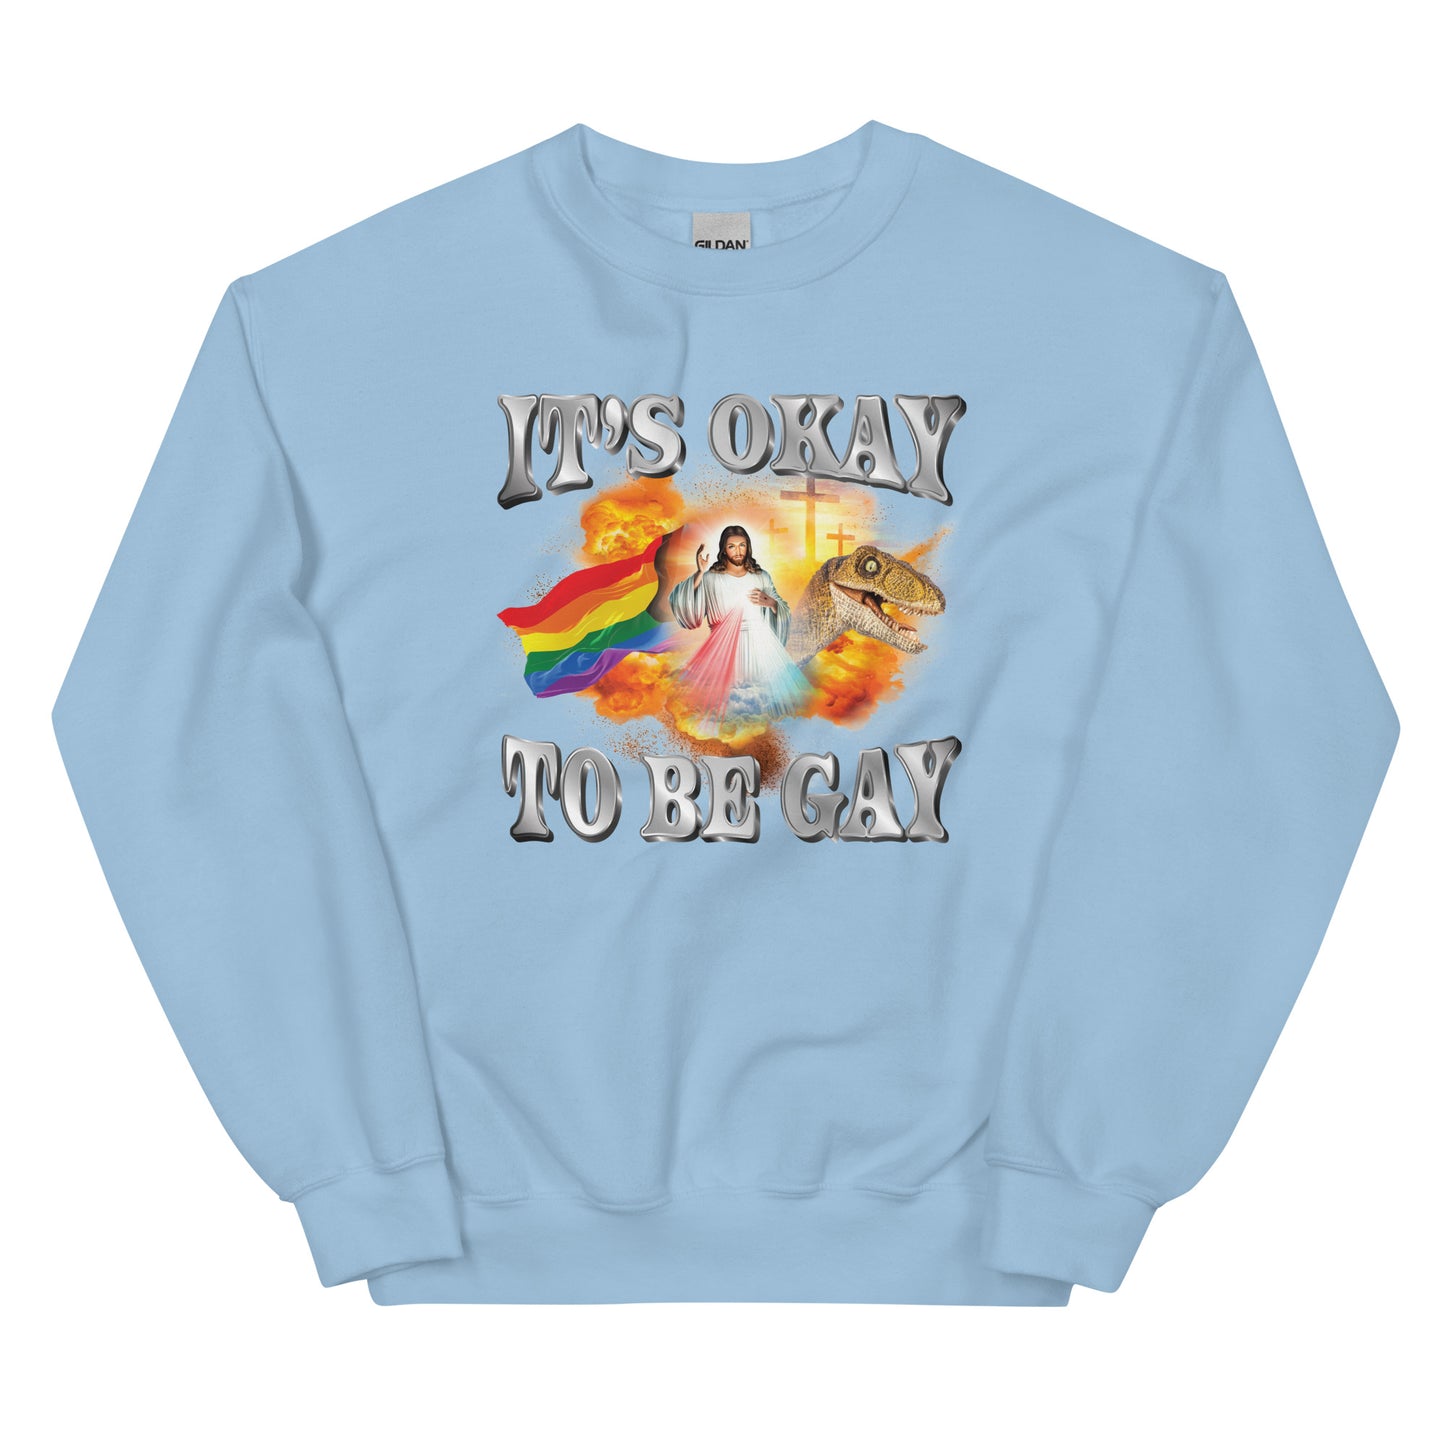 It's Okay to be Gay (Jesus) Unisex Sweatshirt